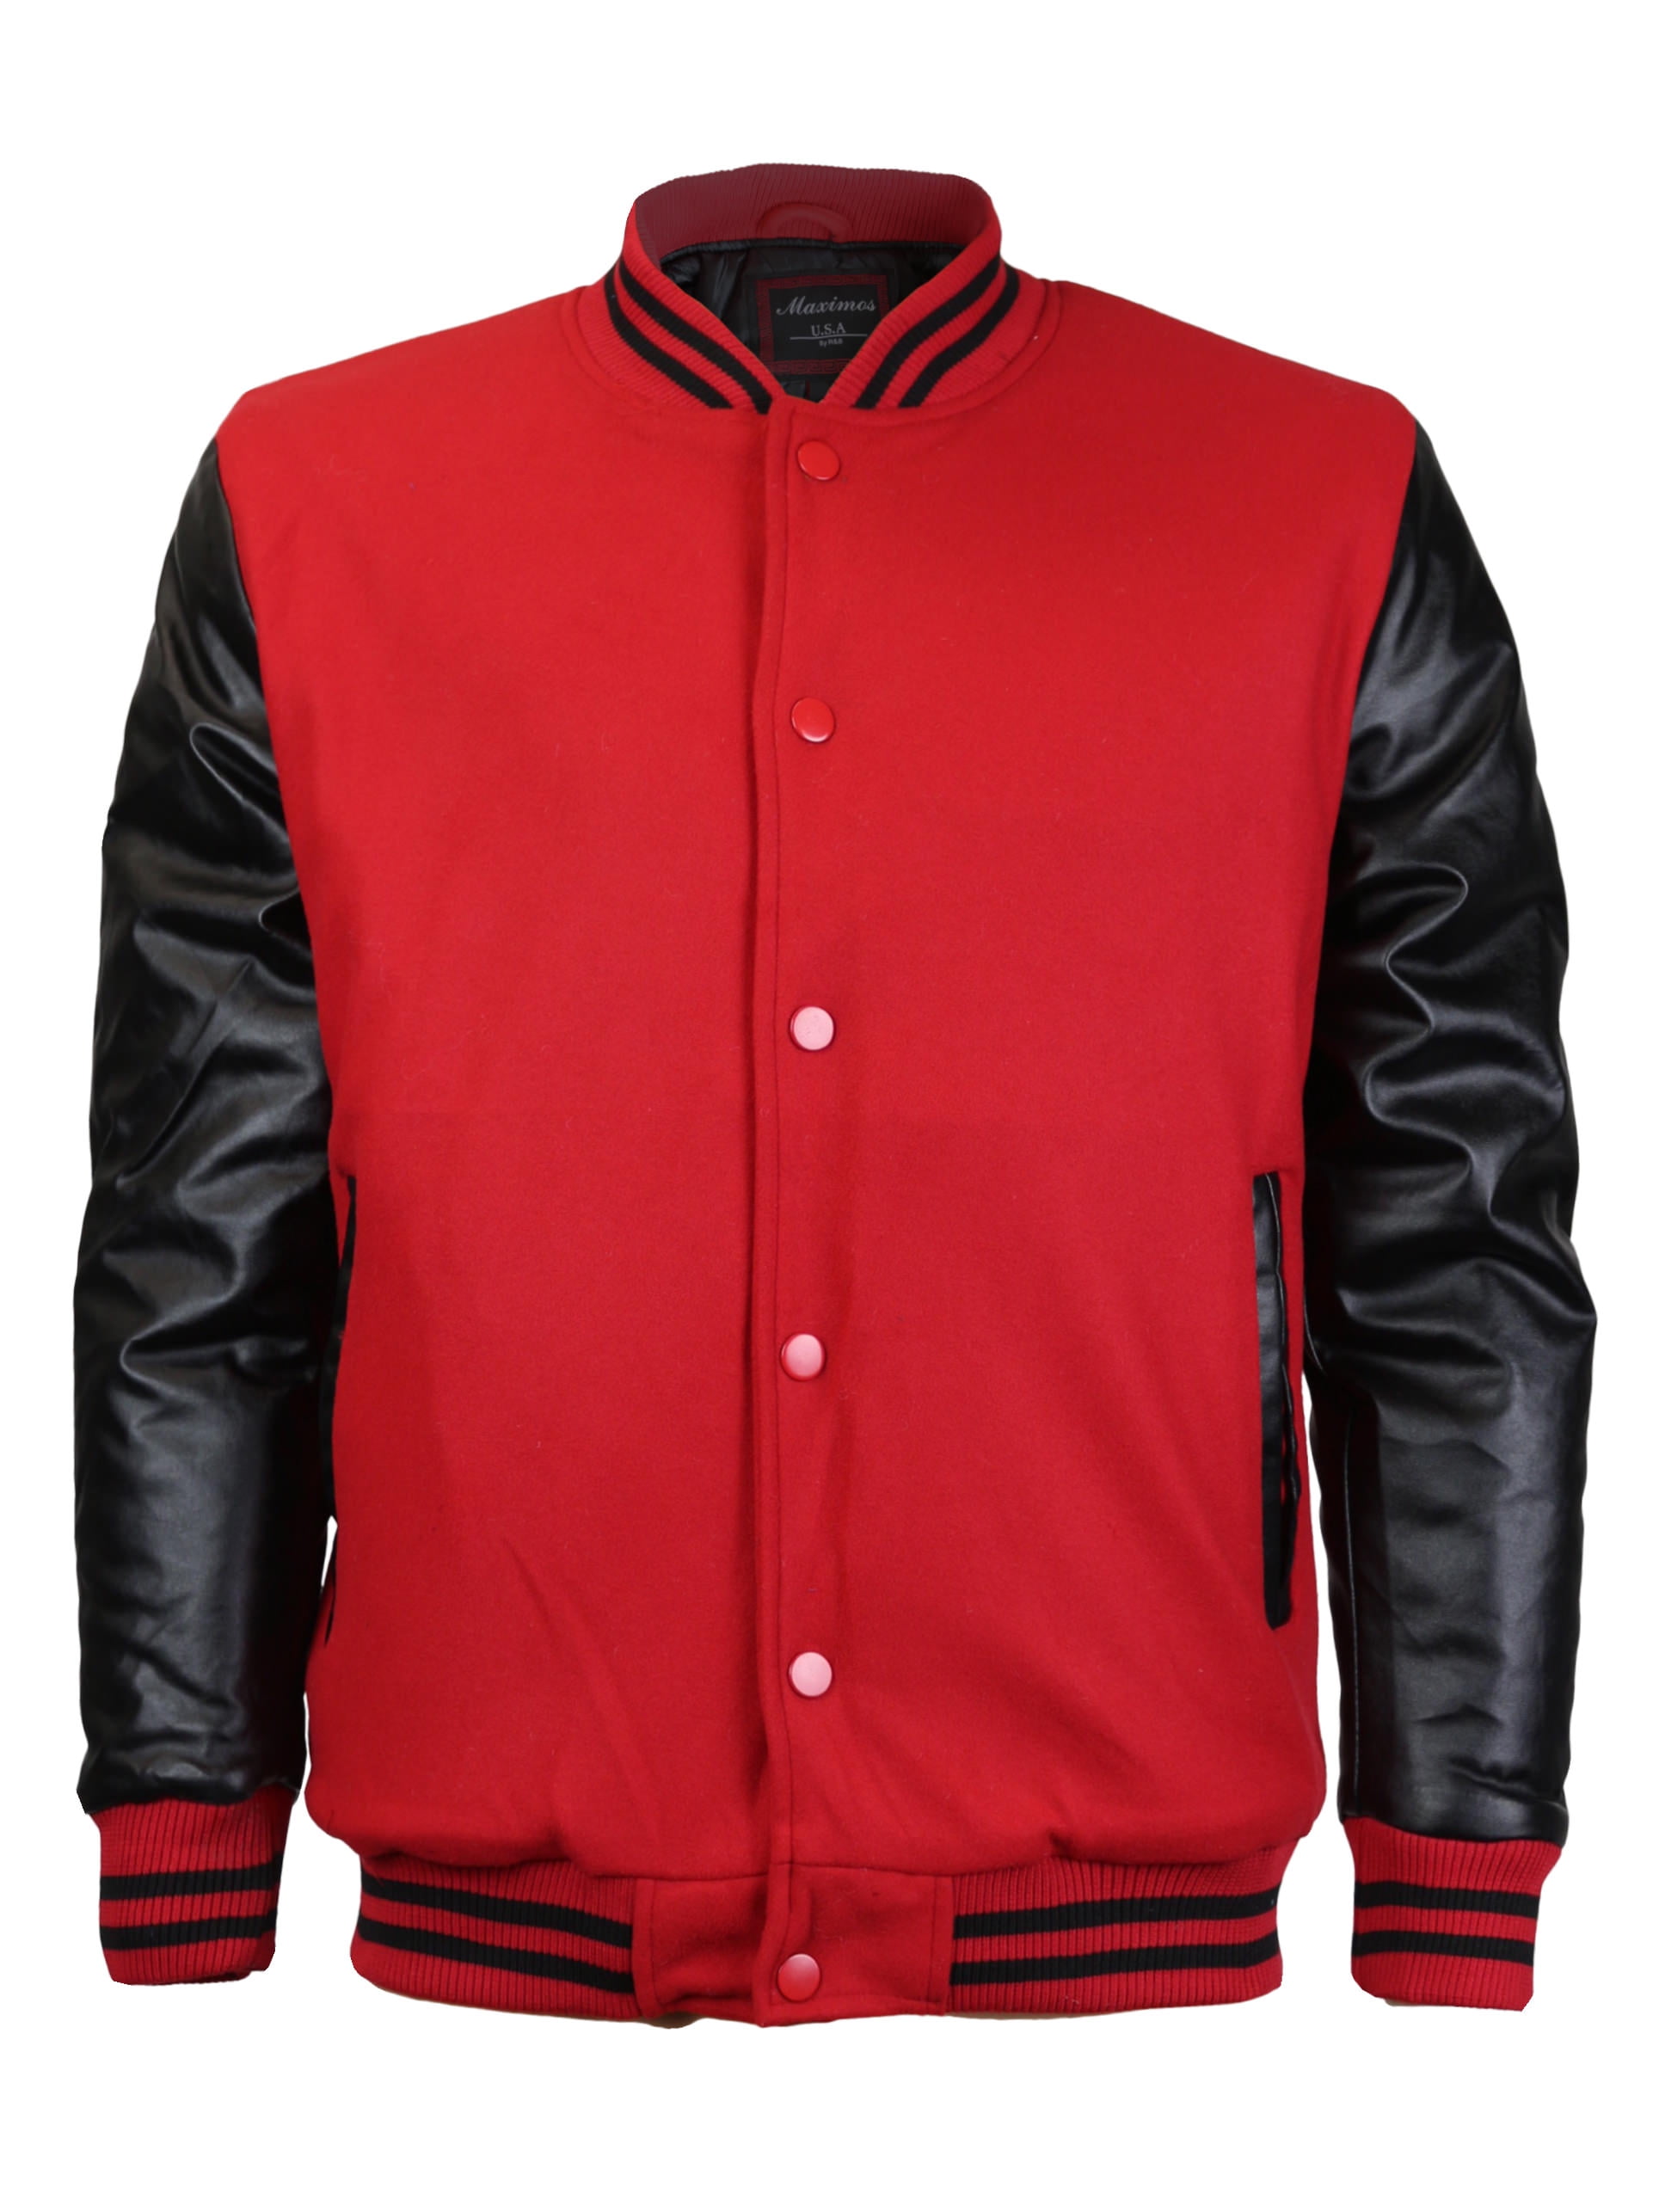 Cuban Flag Baseball Jacket Custom Fleece Varsity Uniform Sport Coat for Youth 